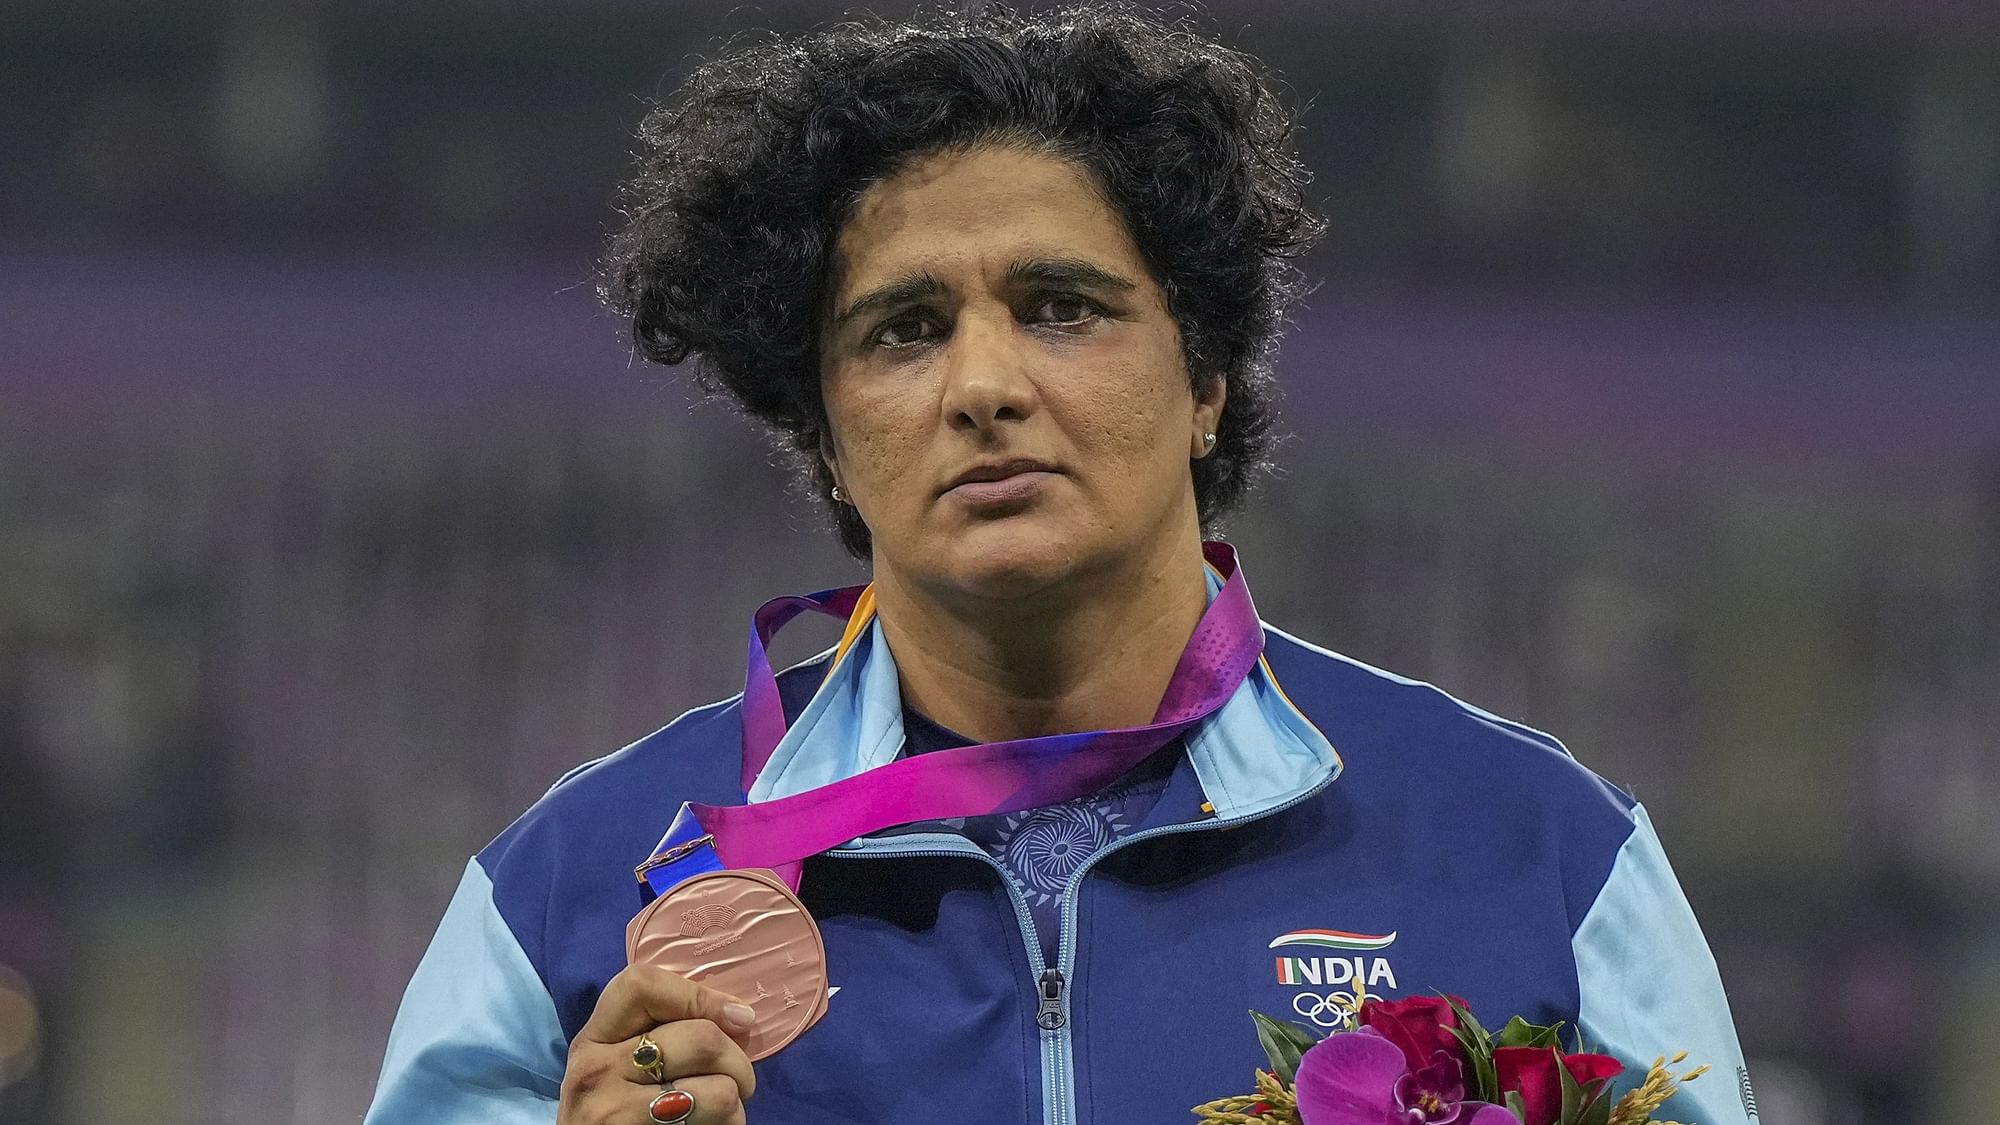 <div class="paragraphs"><p>Seema Punia won a bronze medal in the women's discus throw event</p></div>